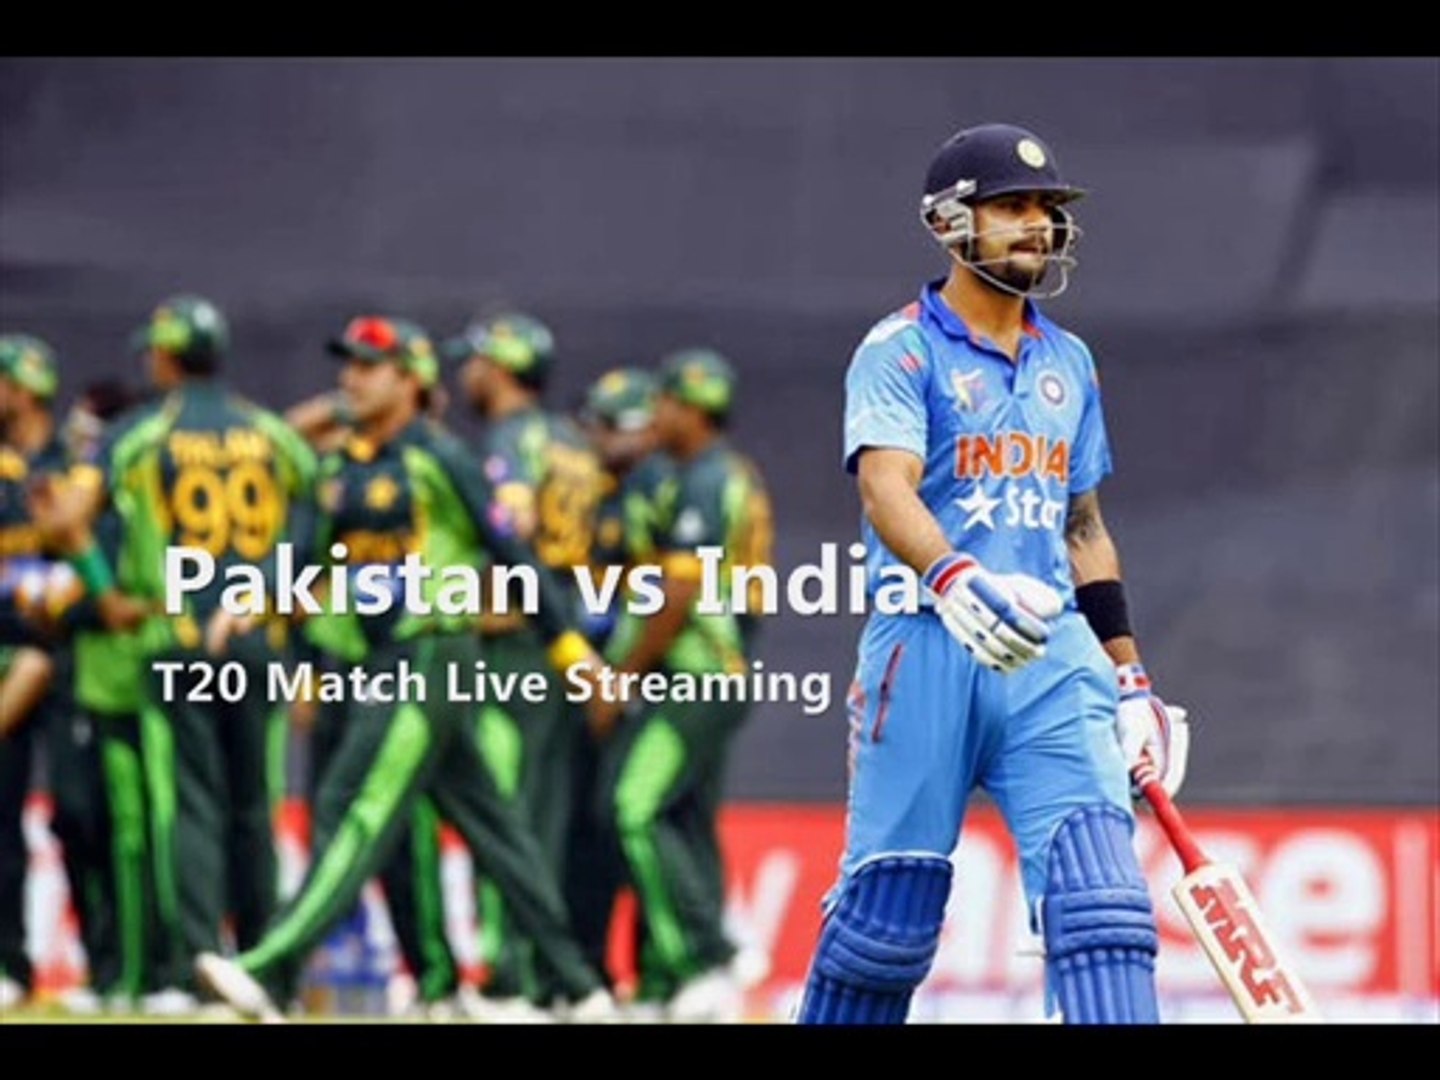 Pakistan Vs India Live Streaming 13th T20 Match Highlights - Pak vs Ind Live